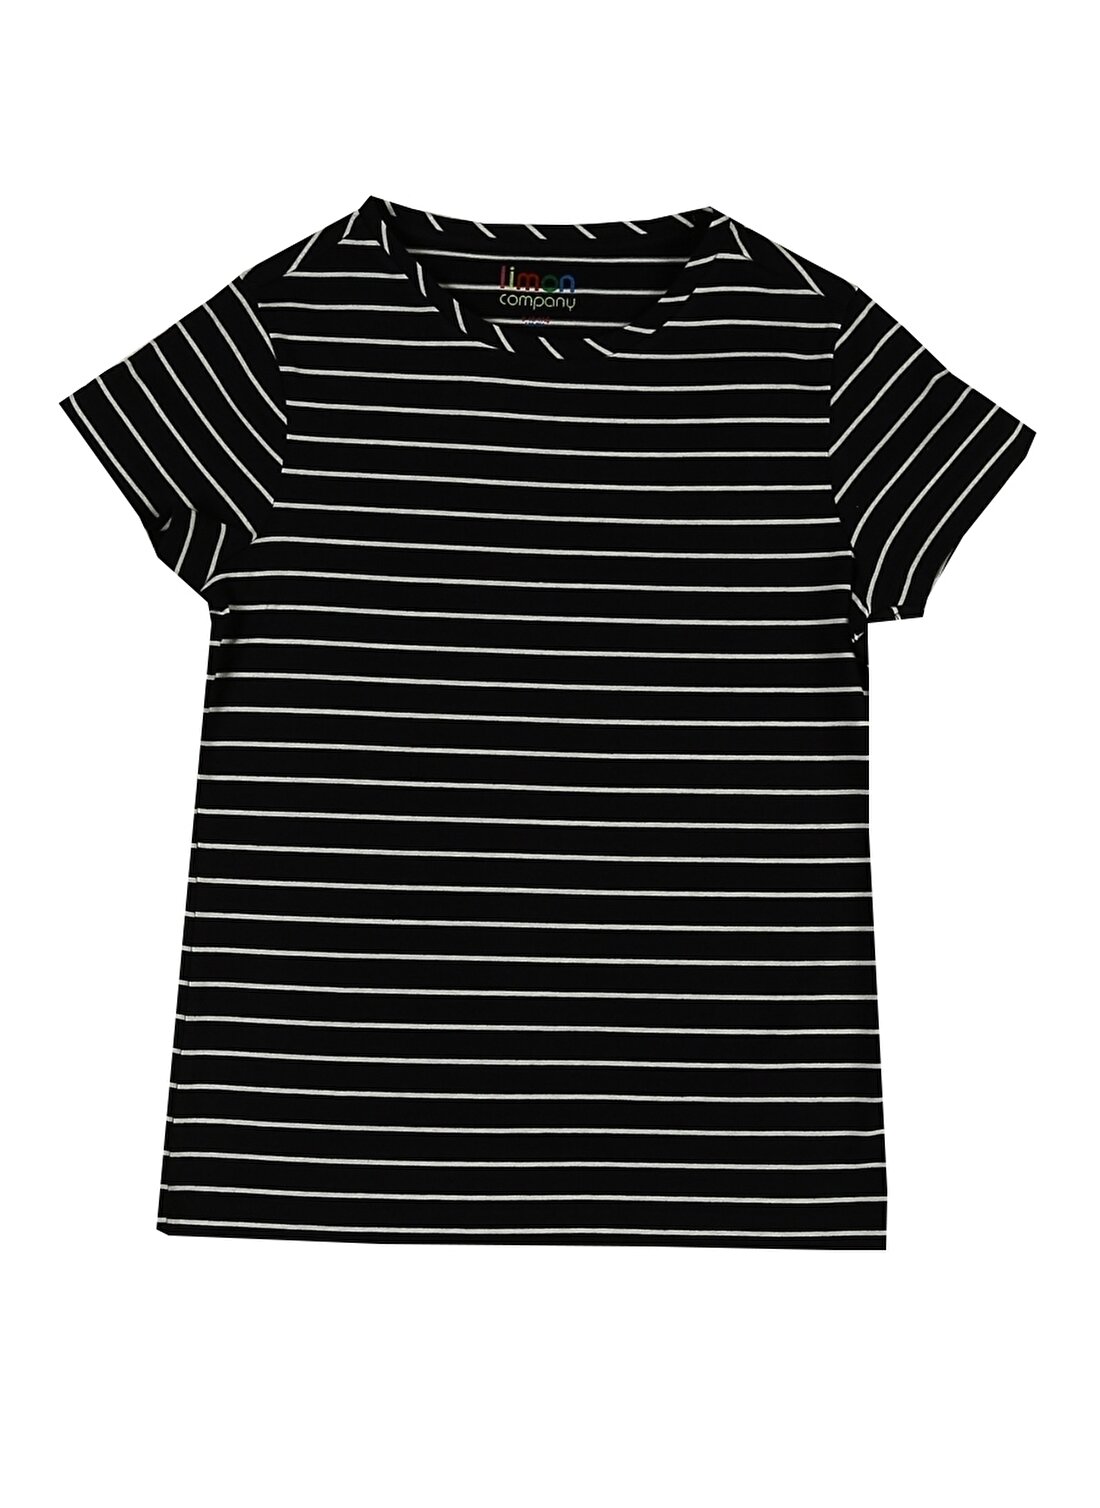 Limon Turkuaz - Mavi - Siyah Kız Çocuk T-Shirt